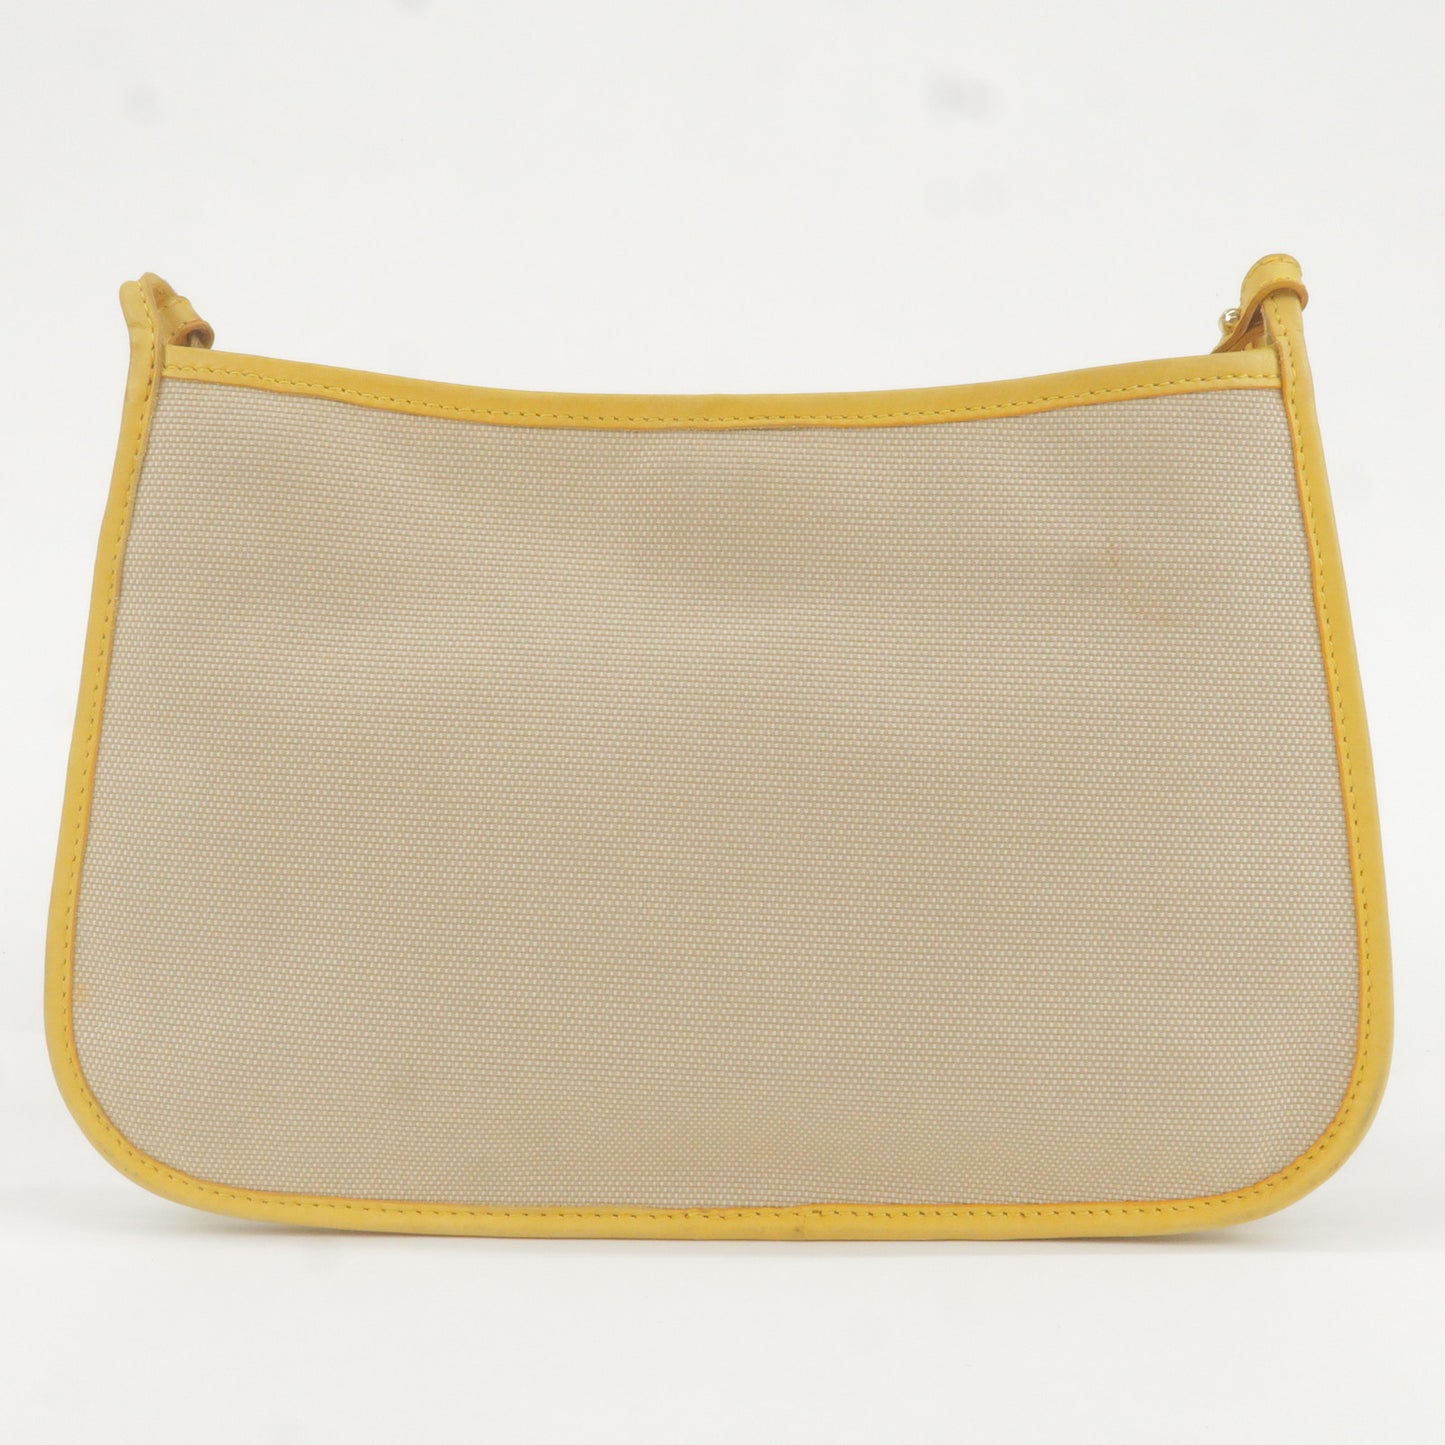 FENDI Logo Canvas Leather Shoulder Bag Beige Yellow 8BT084